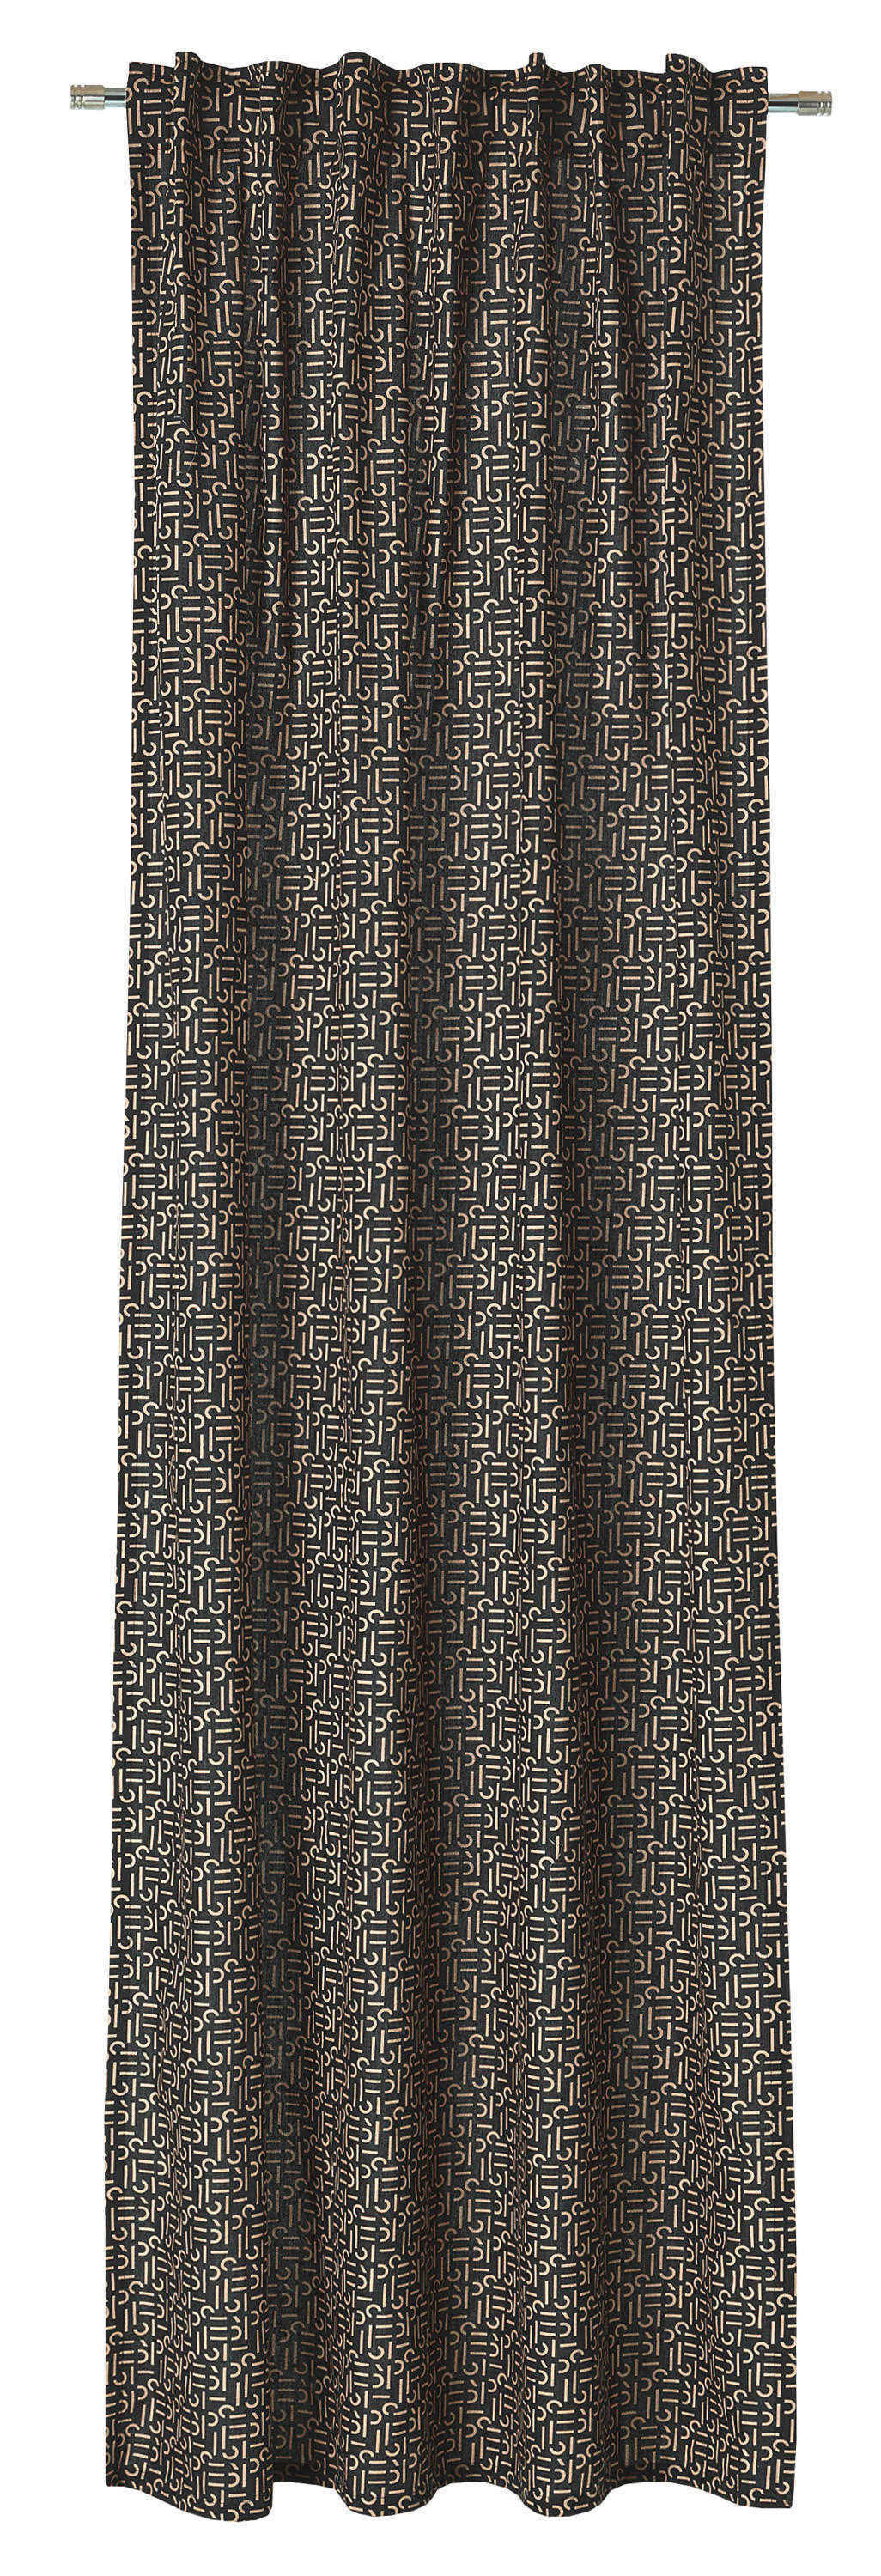 FERTIGVORHANG E-Scatter blickdicht 130/250 cm   - Taupe/Schwarz, Design, Textil (130/250cm) - Esprit